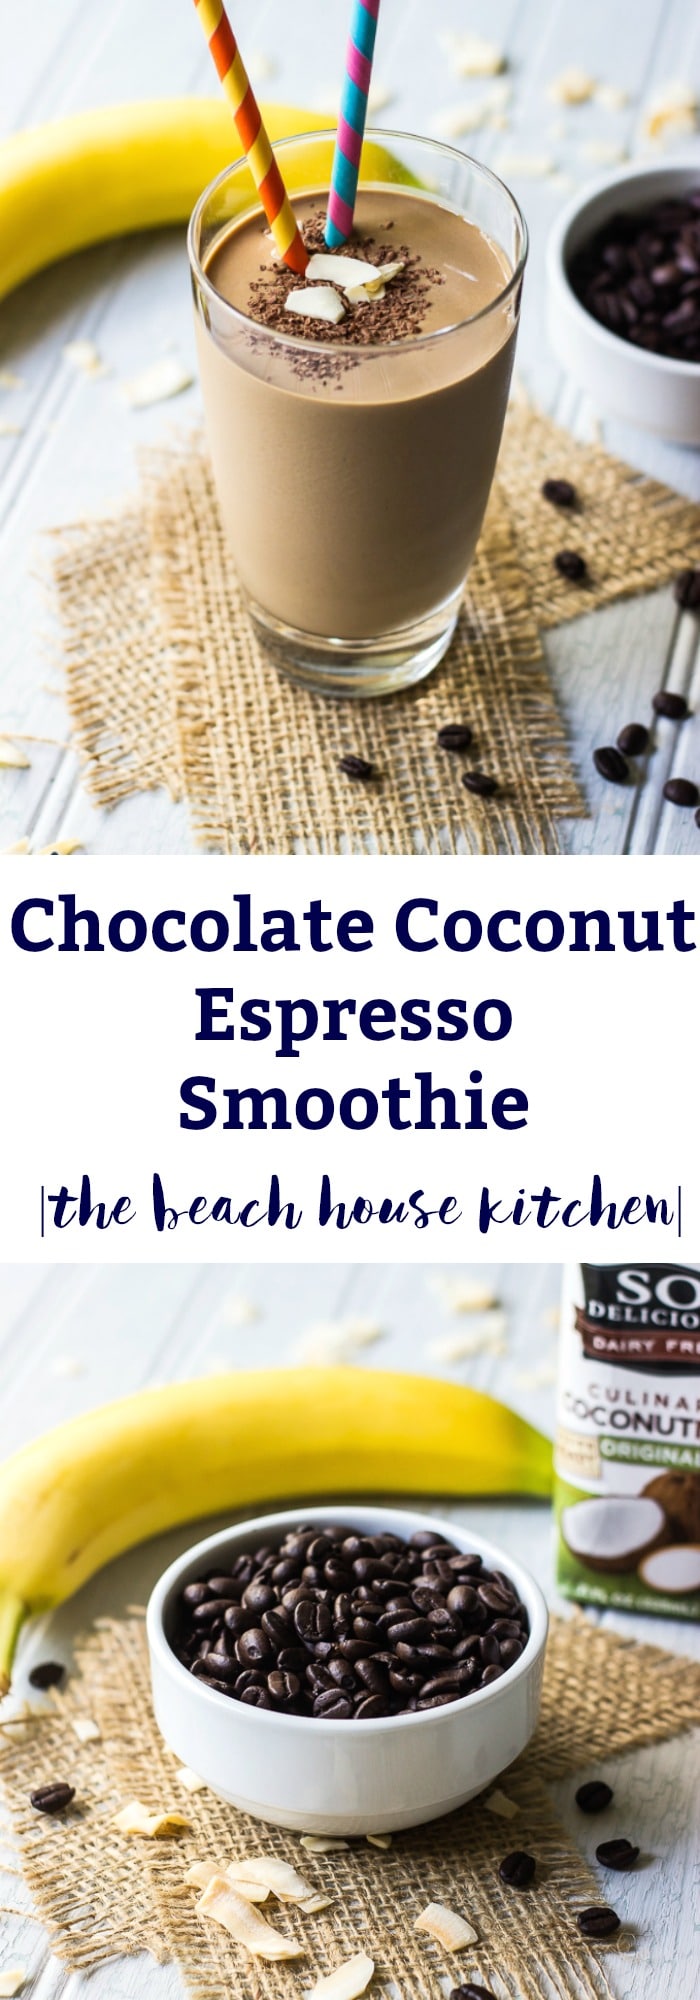 Chocolate Coconut Espresso Smoothie